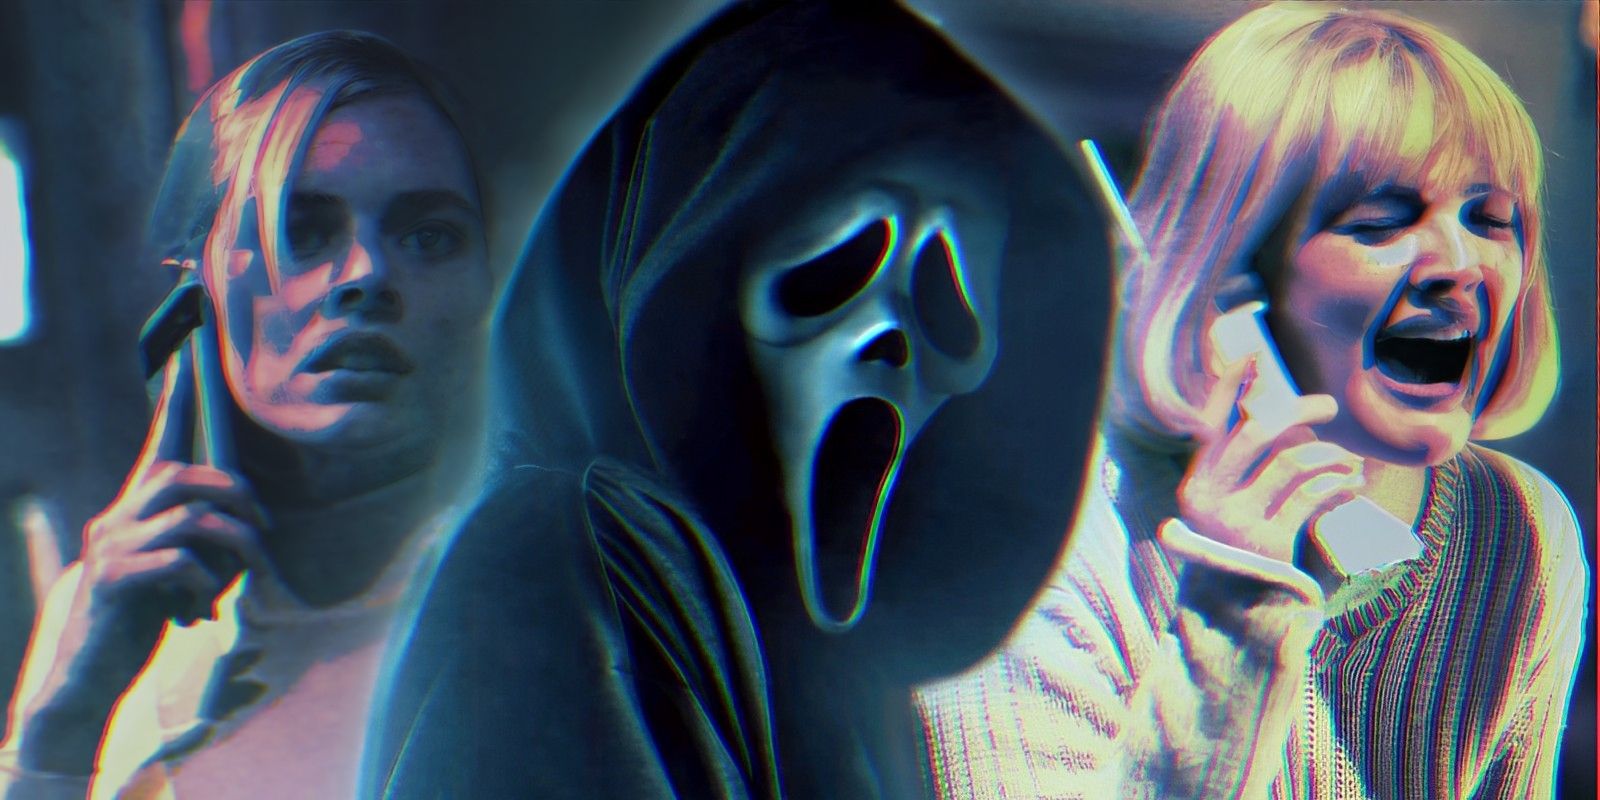 Laura Crane de Scream 6 y Casey Becker de Scream junto a Ghostface.